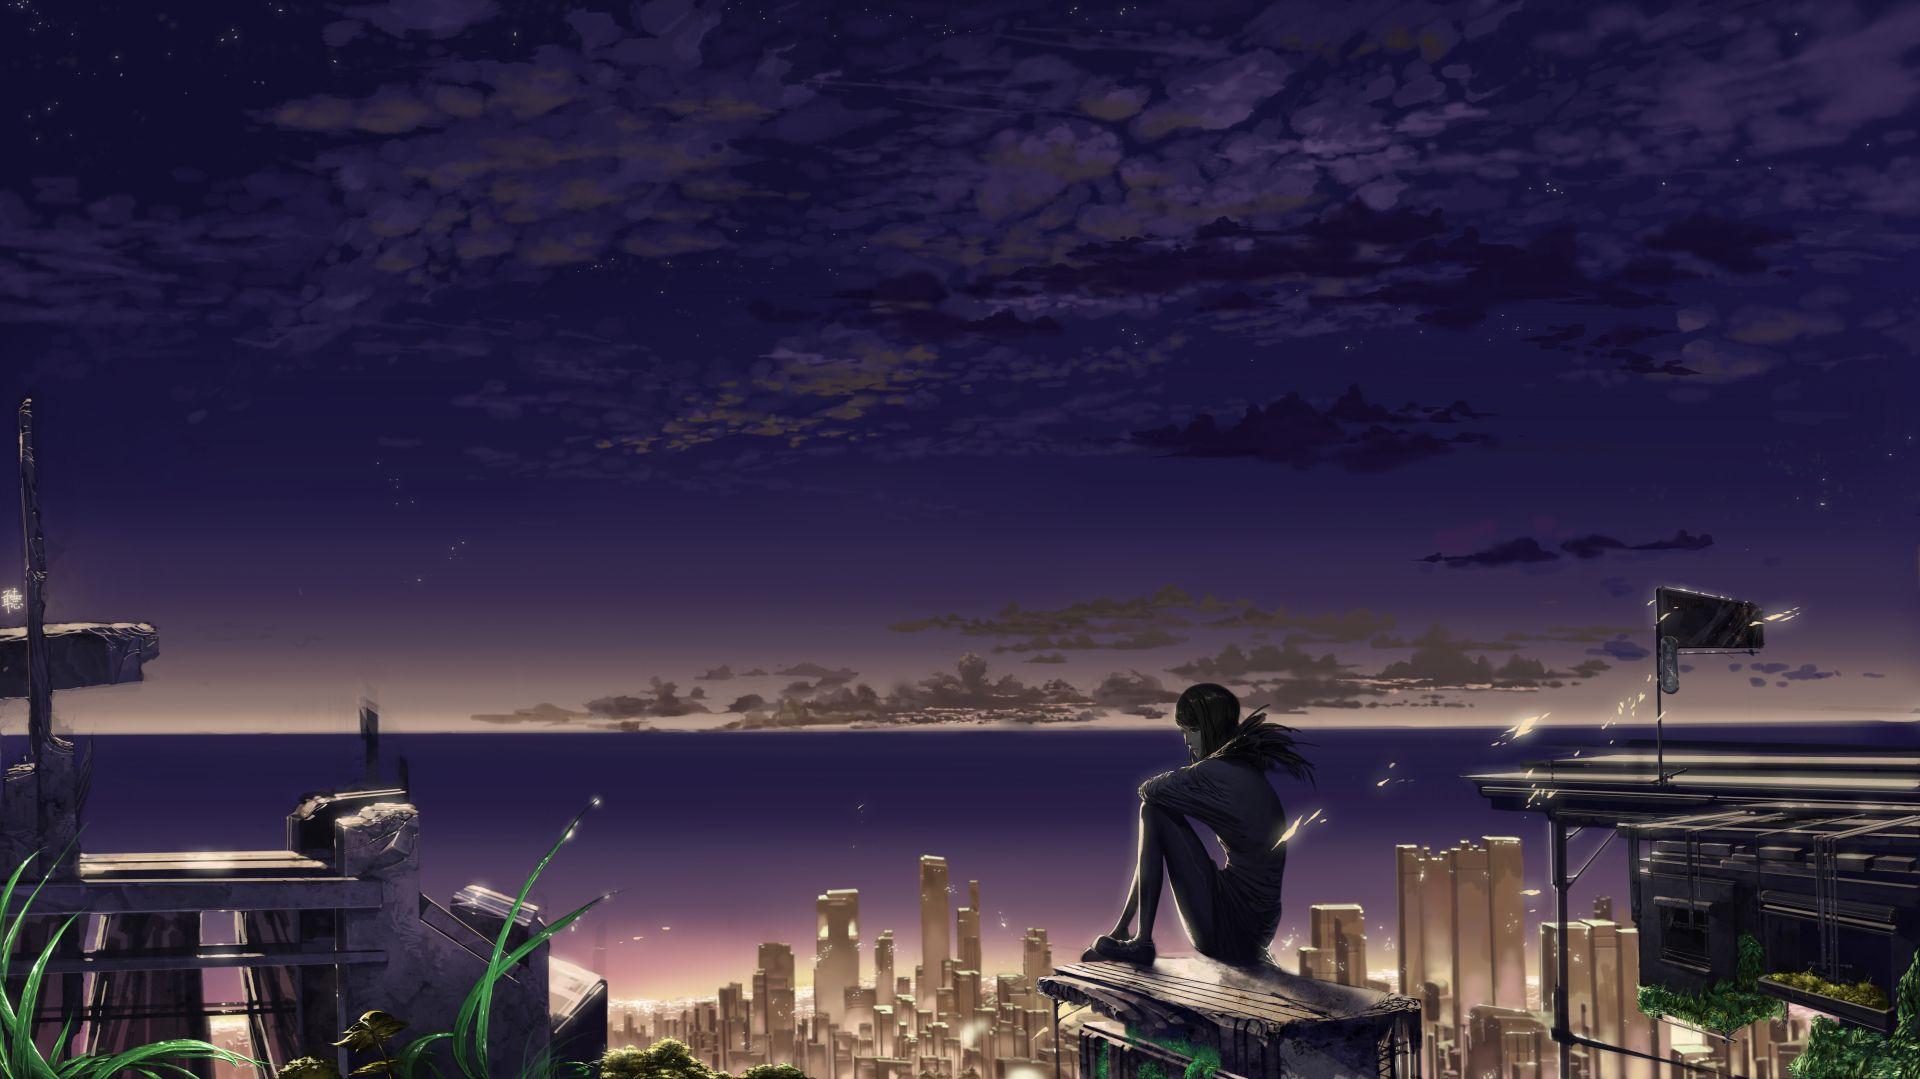 Edge Of Building Rooftop Anime / 1280 x 720 jpeg 298kb.